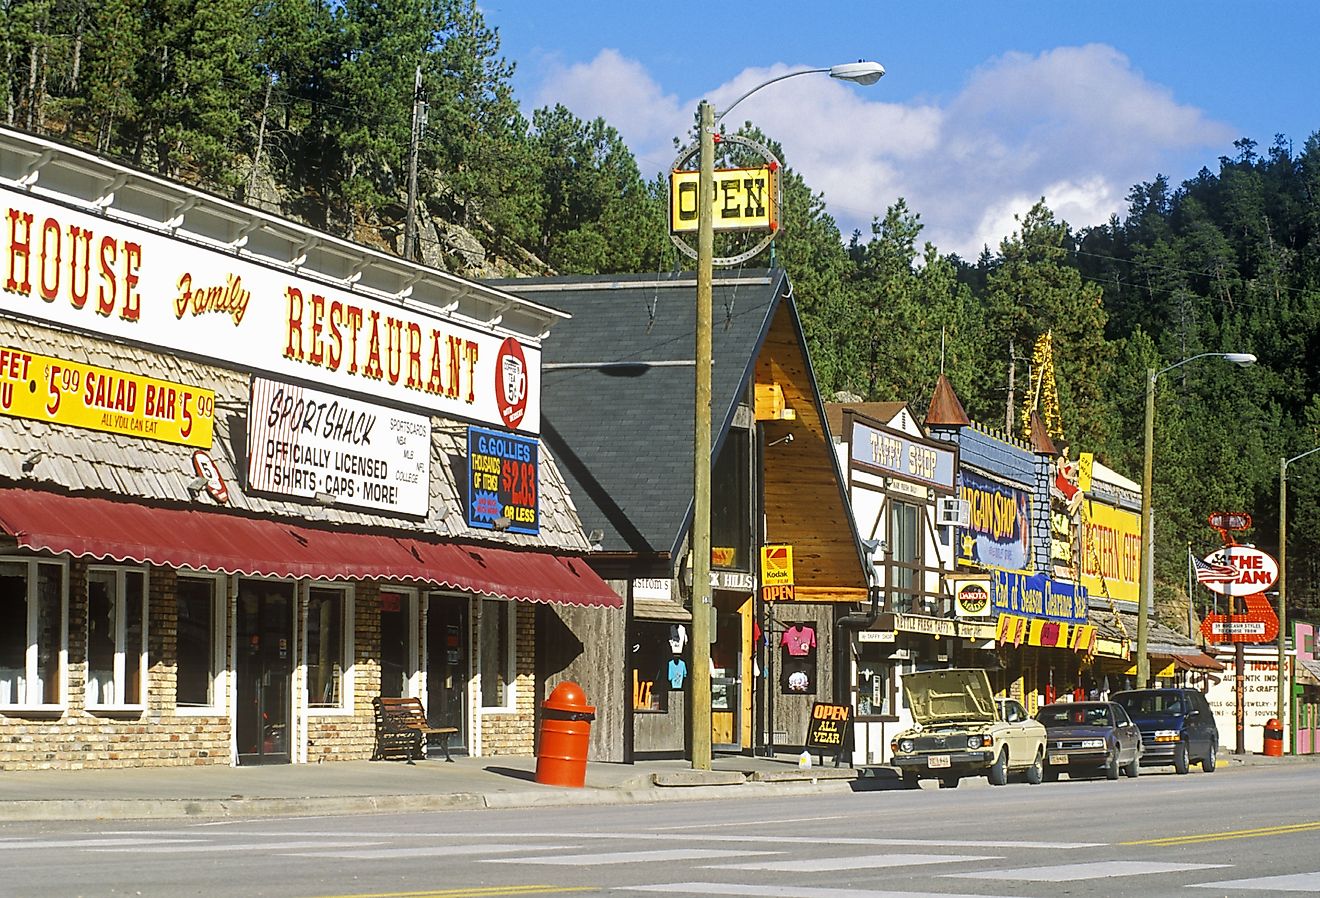 Keystone, South Dakota, storefronts circa 1990. Image credit Joseph Sohm via Shutterstock.